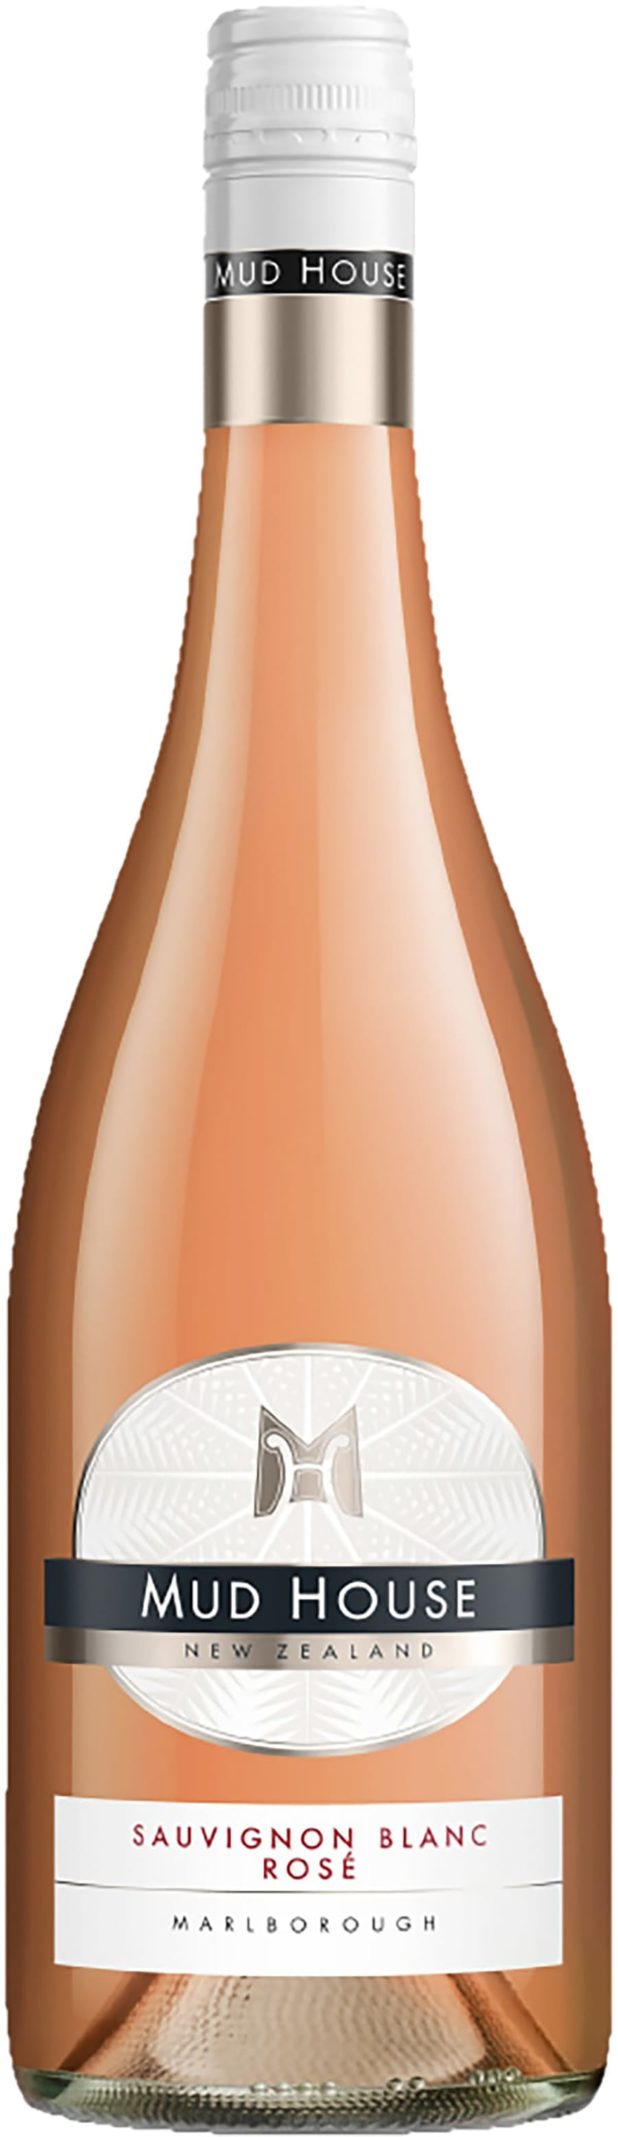 Mud House Sauvignon Blanc Rosé 2018